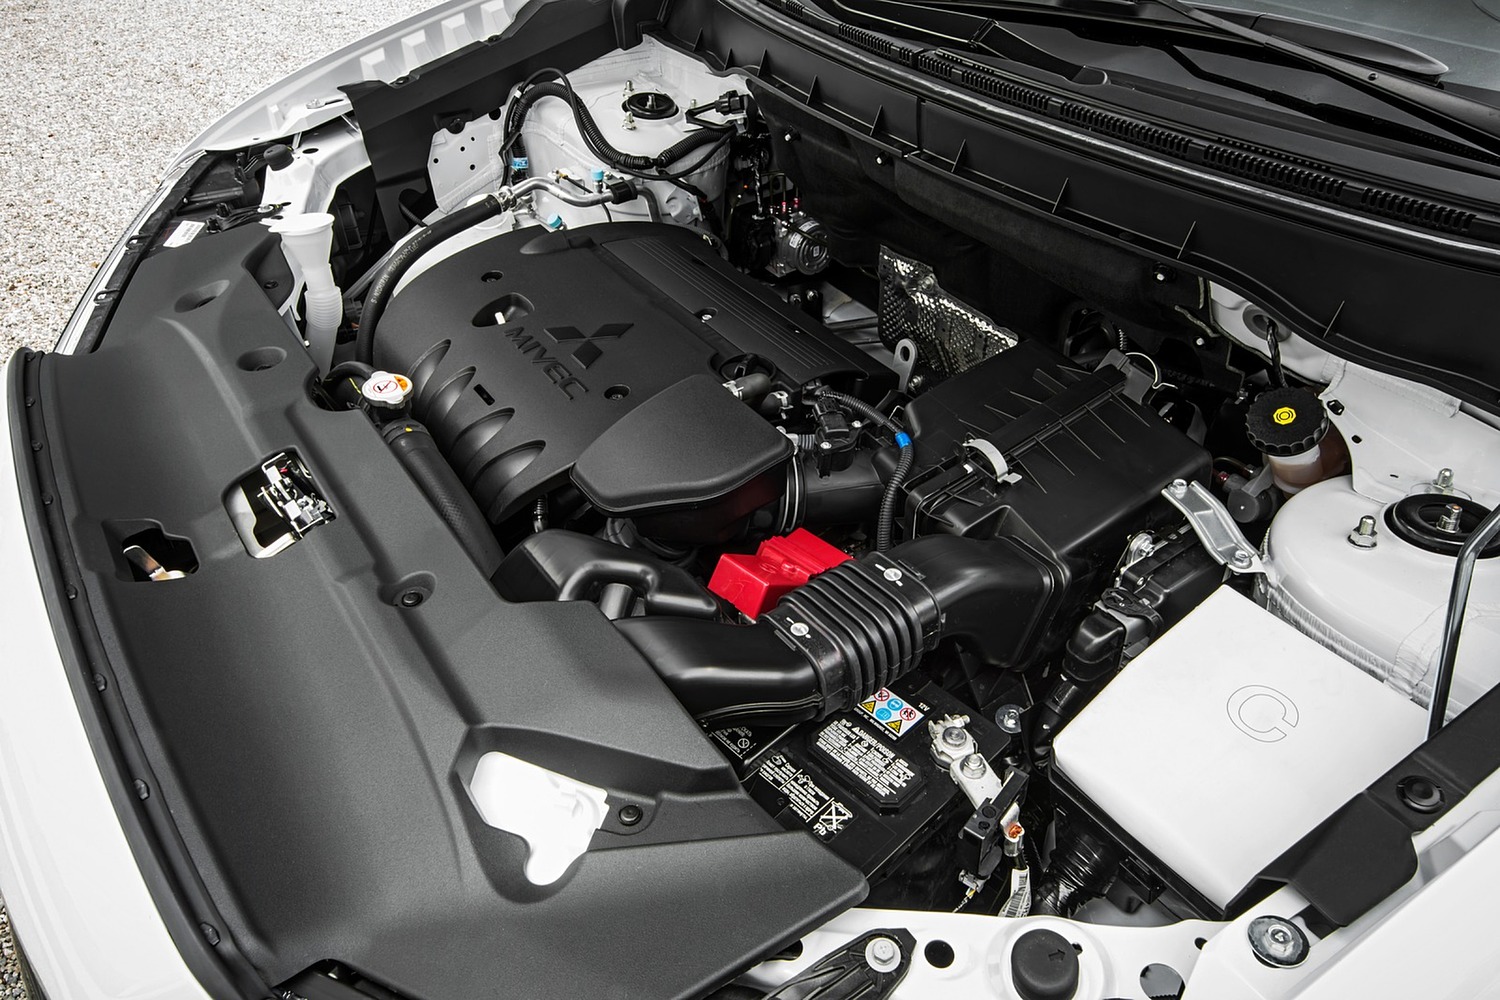 2017 Mitsubishi Outlander Sport 2.4 SEL 4dr SUV 2.4L I4 Engine Shown